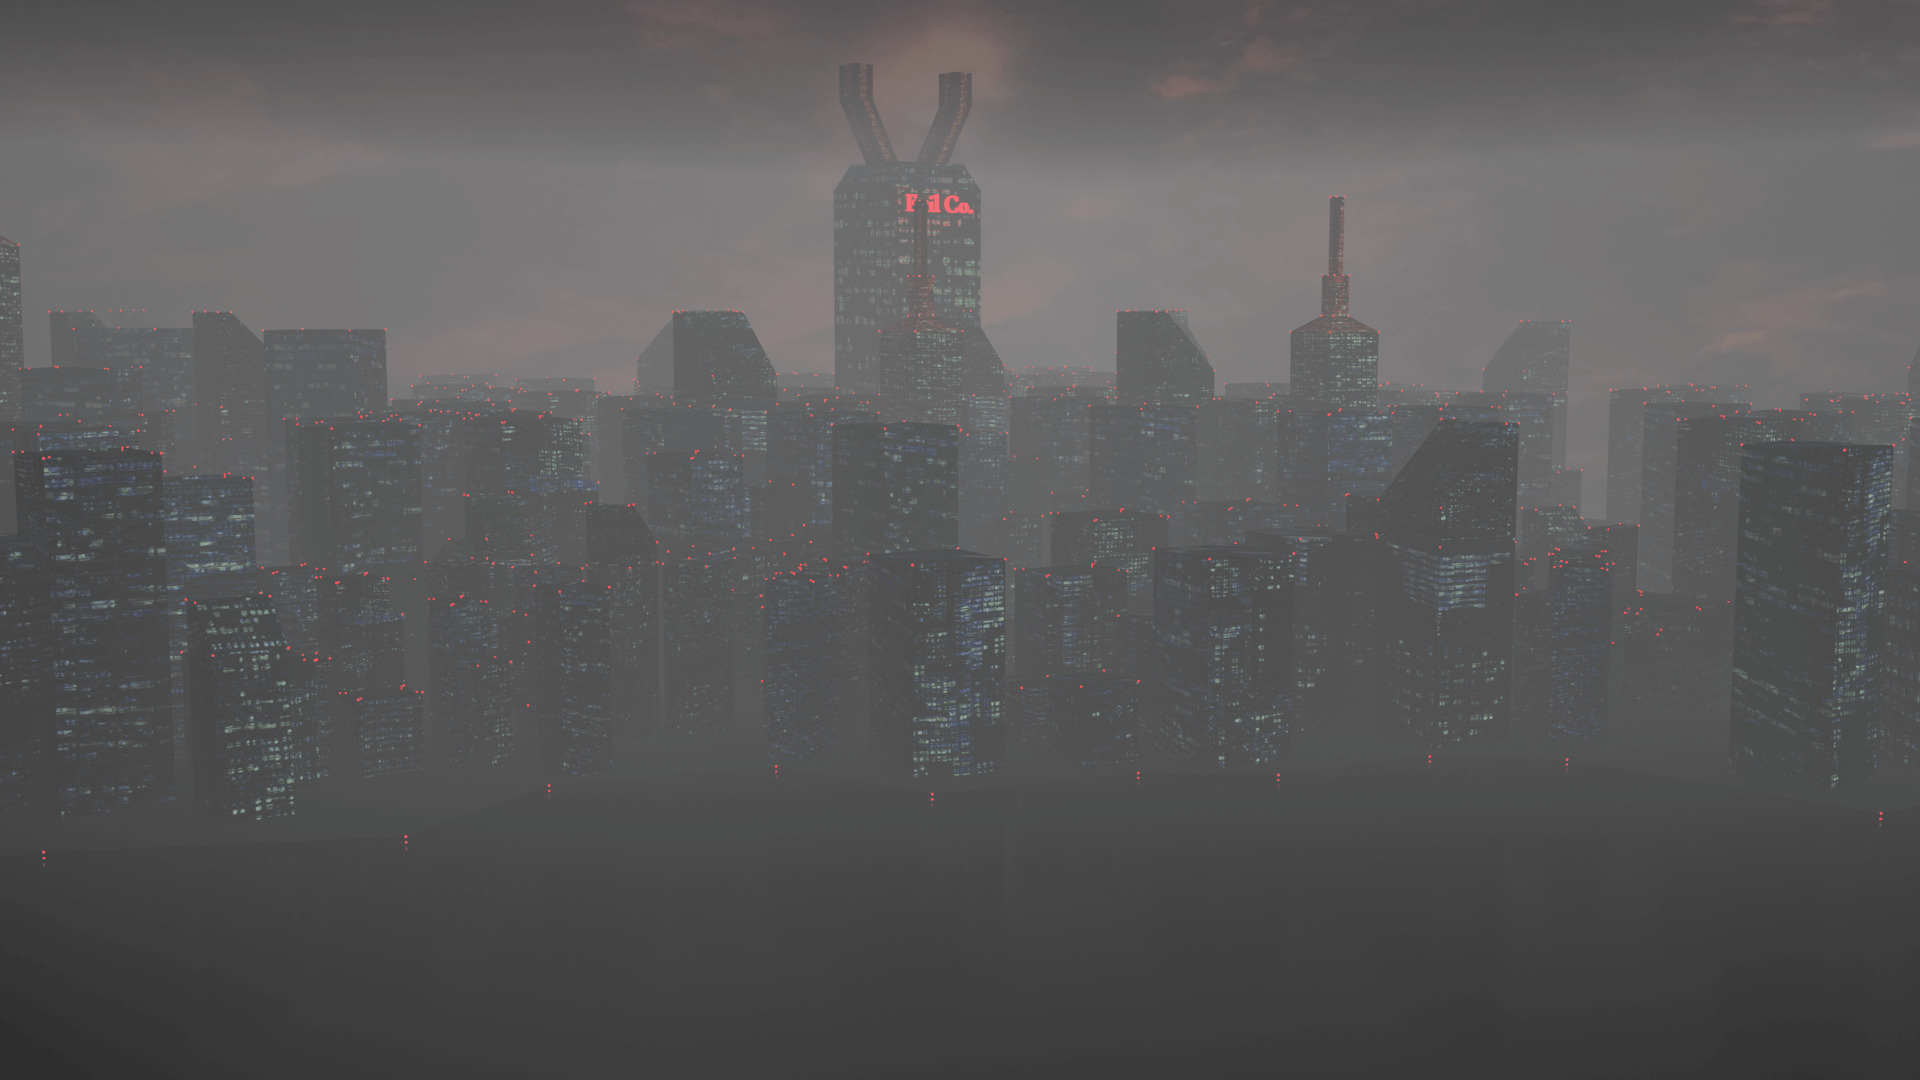 Dystopian city